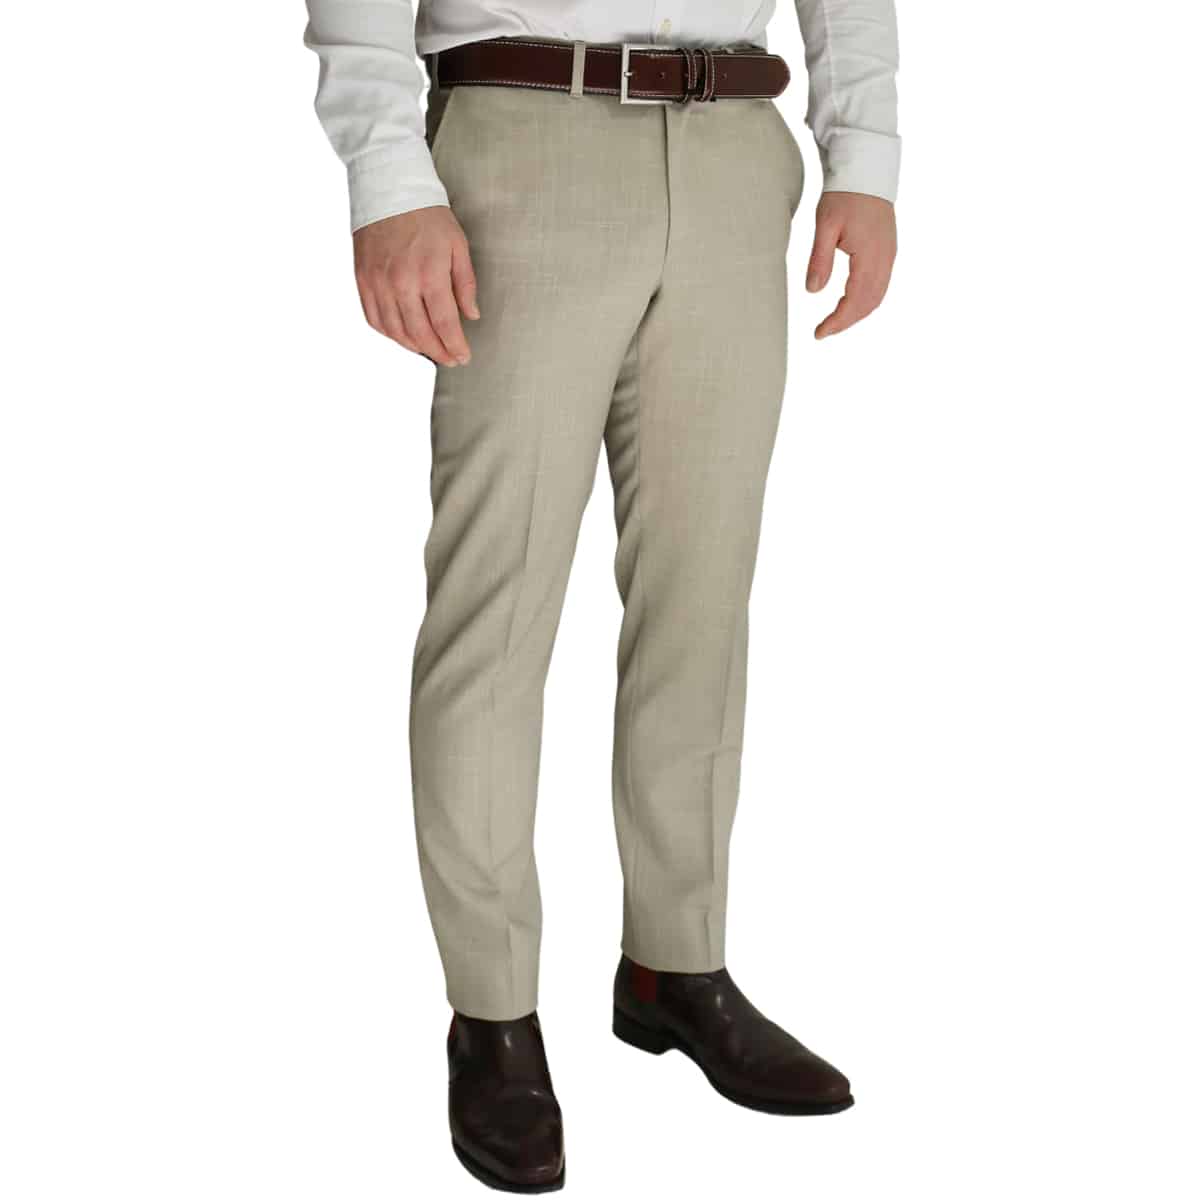 Sfera slacks discount 95% Beige 40                  EU MEN FASHION Trousers Basic 